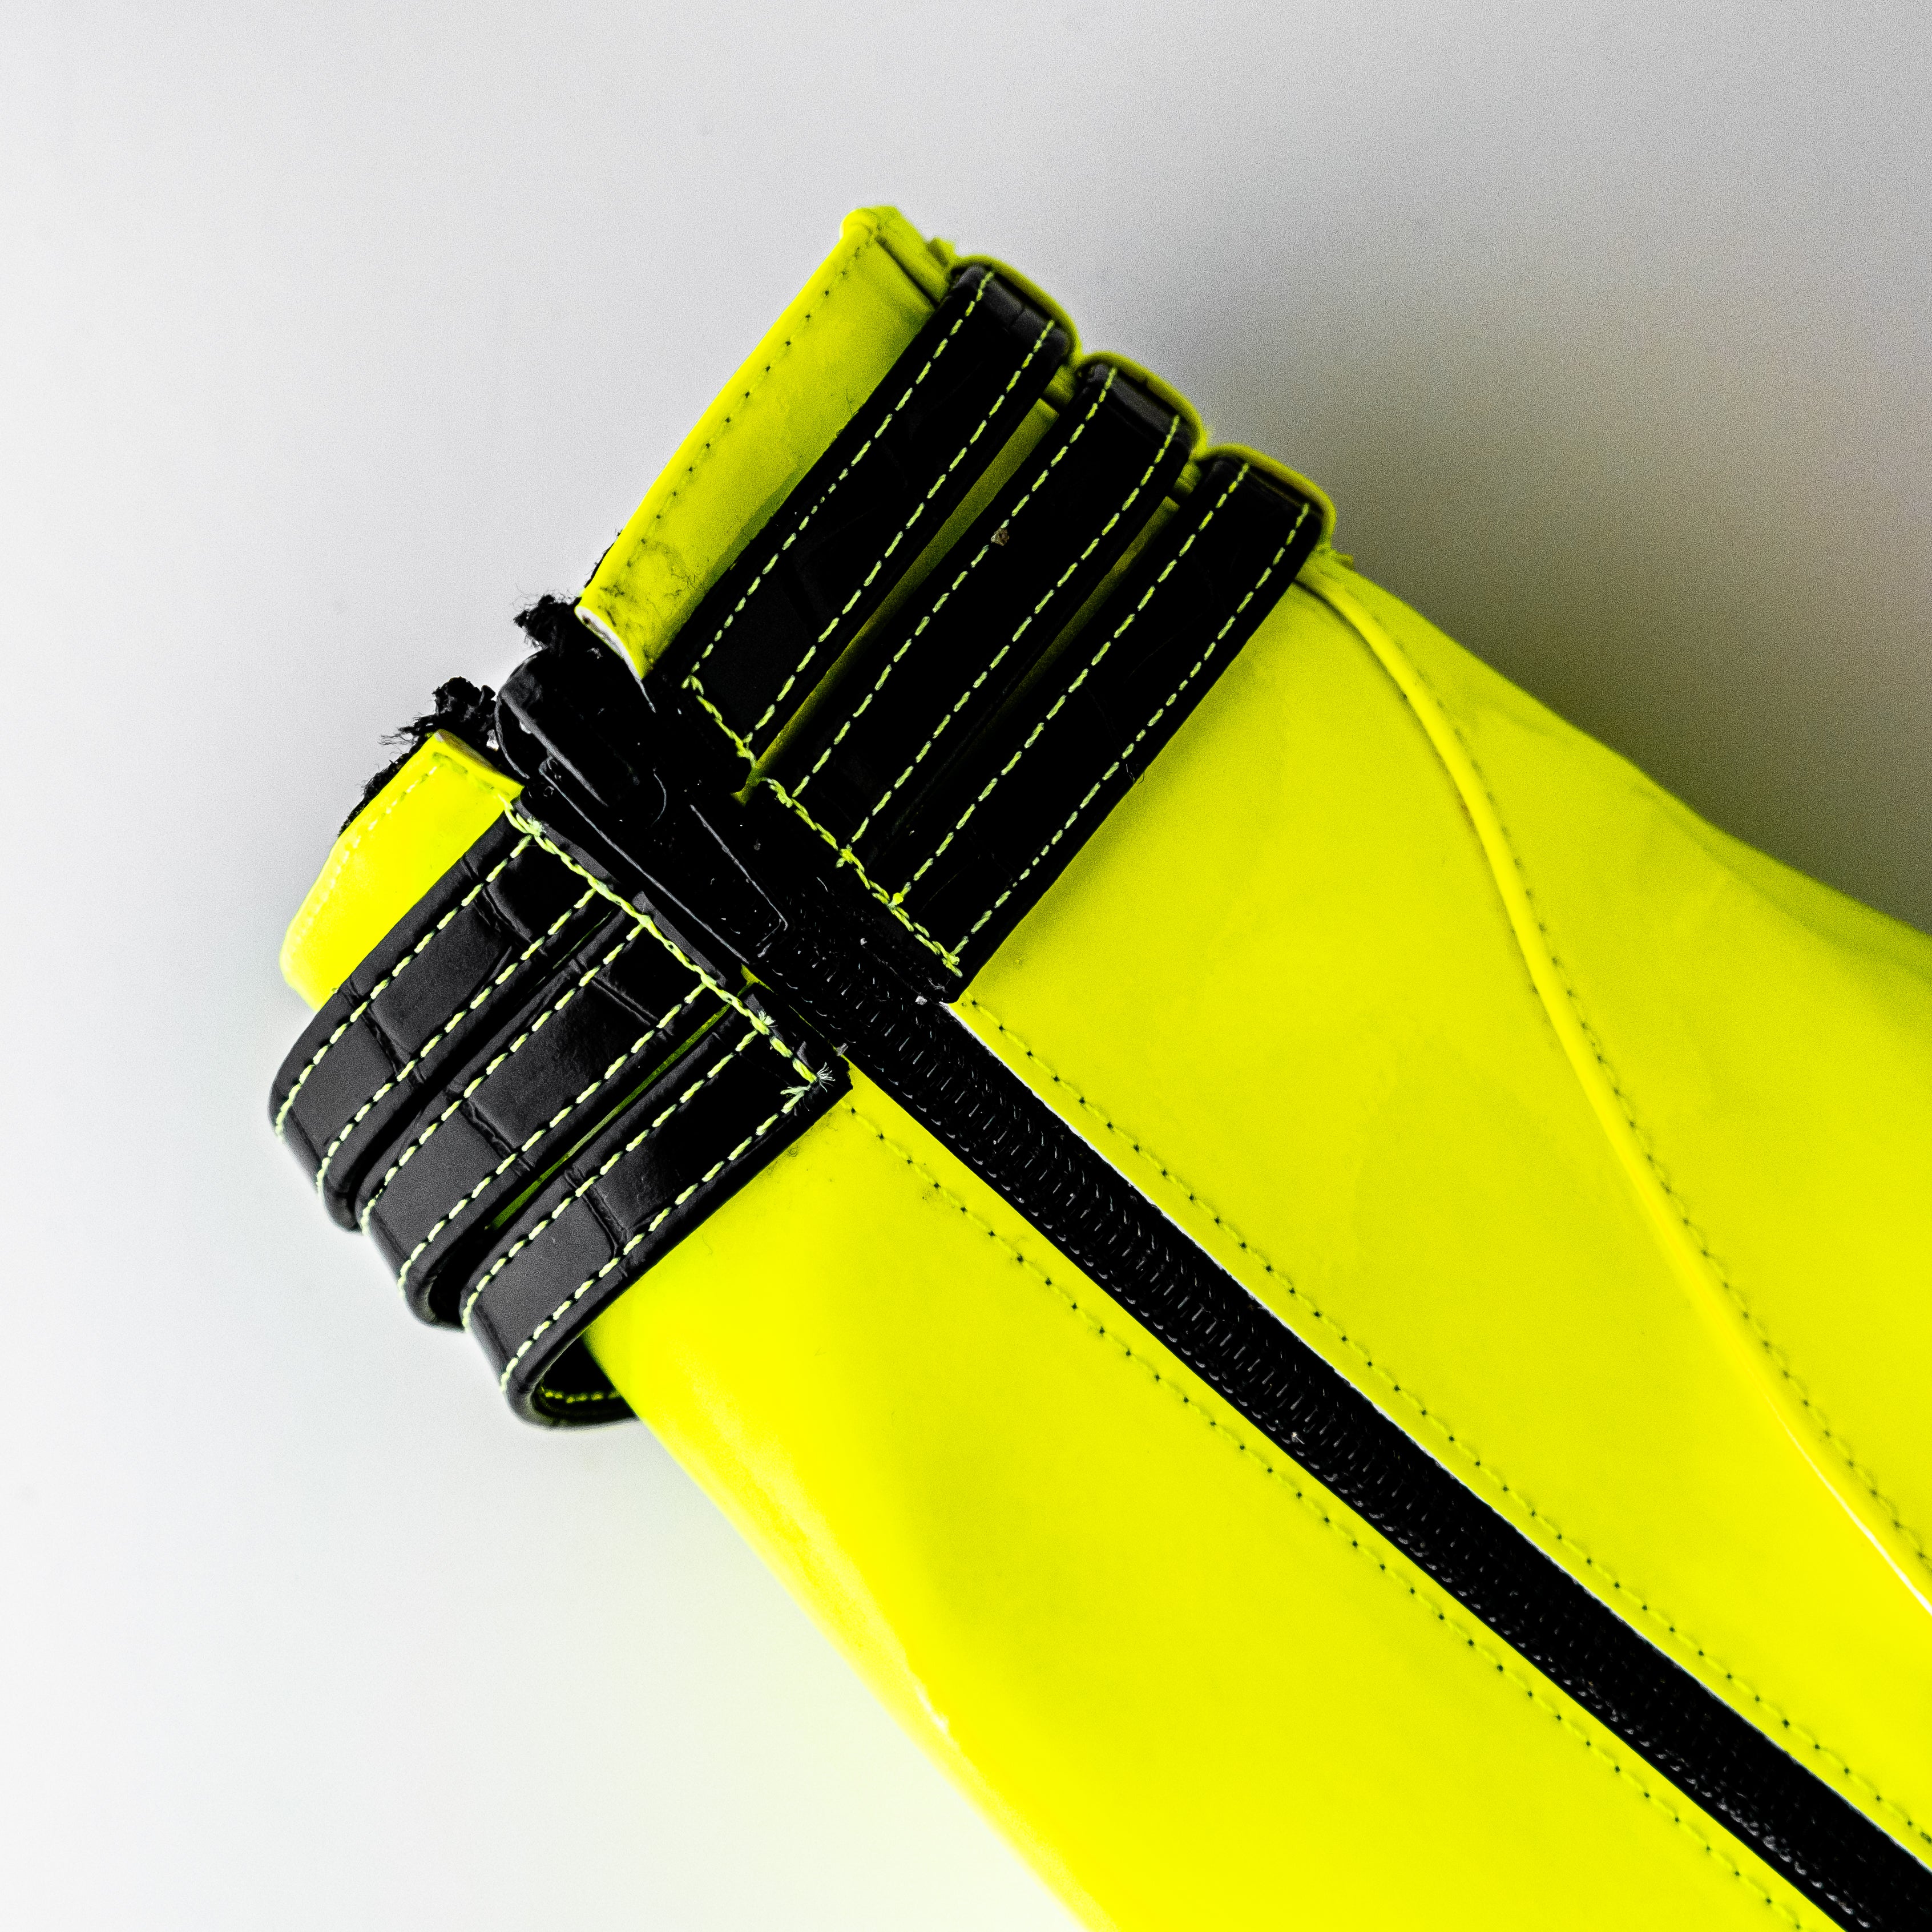 Black Croco Yellow Neon Side Lace High Heels